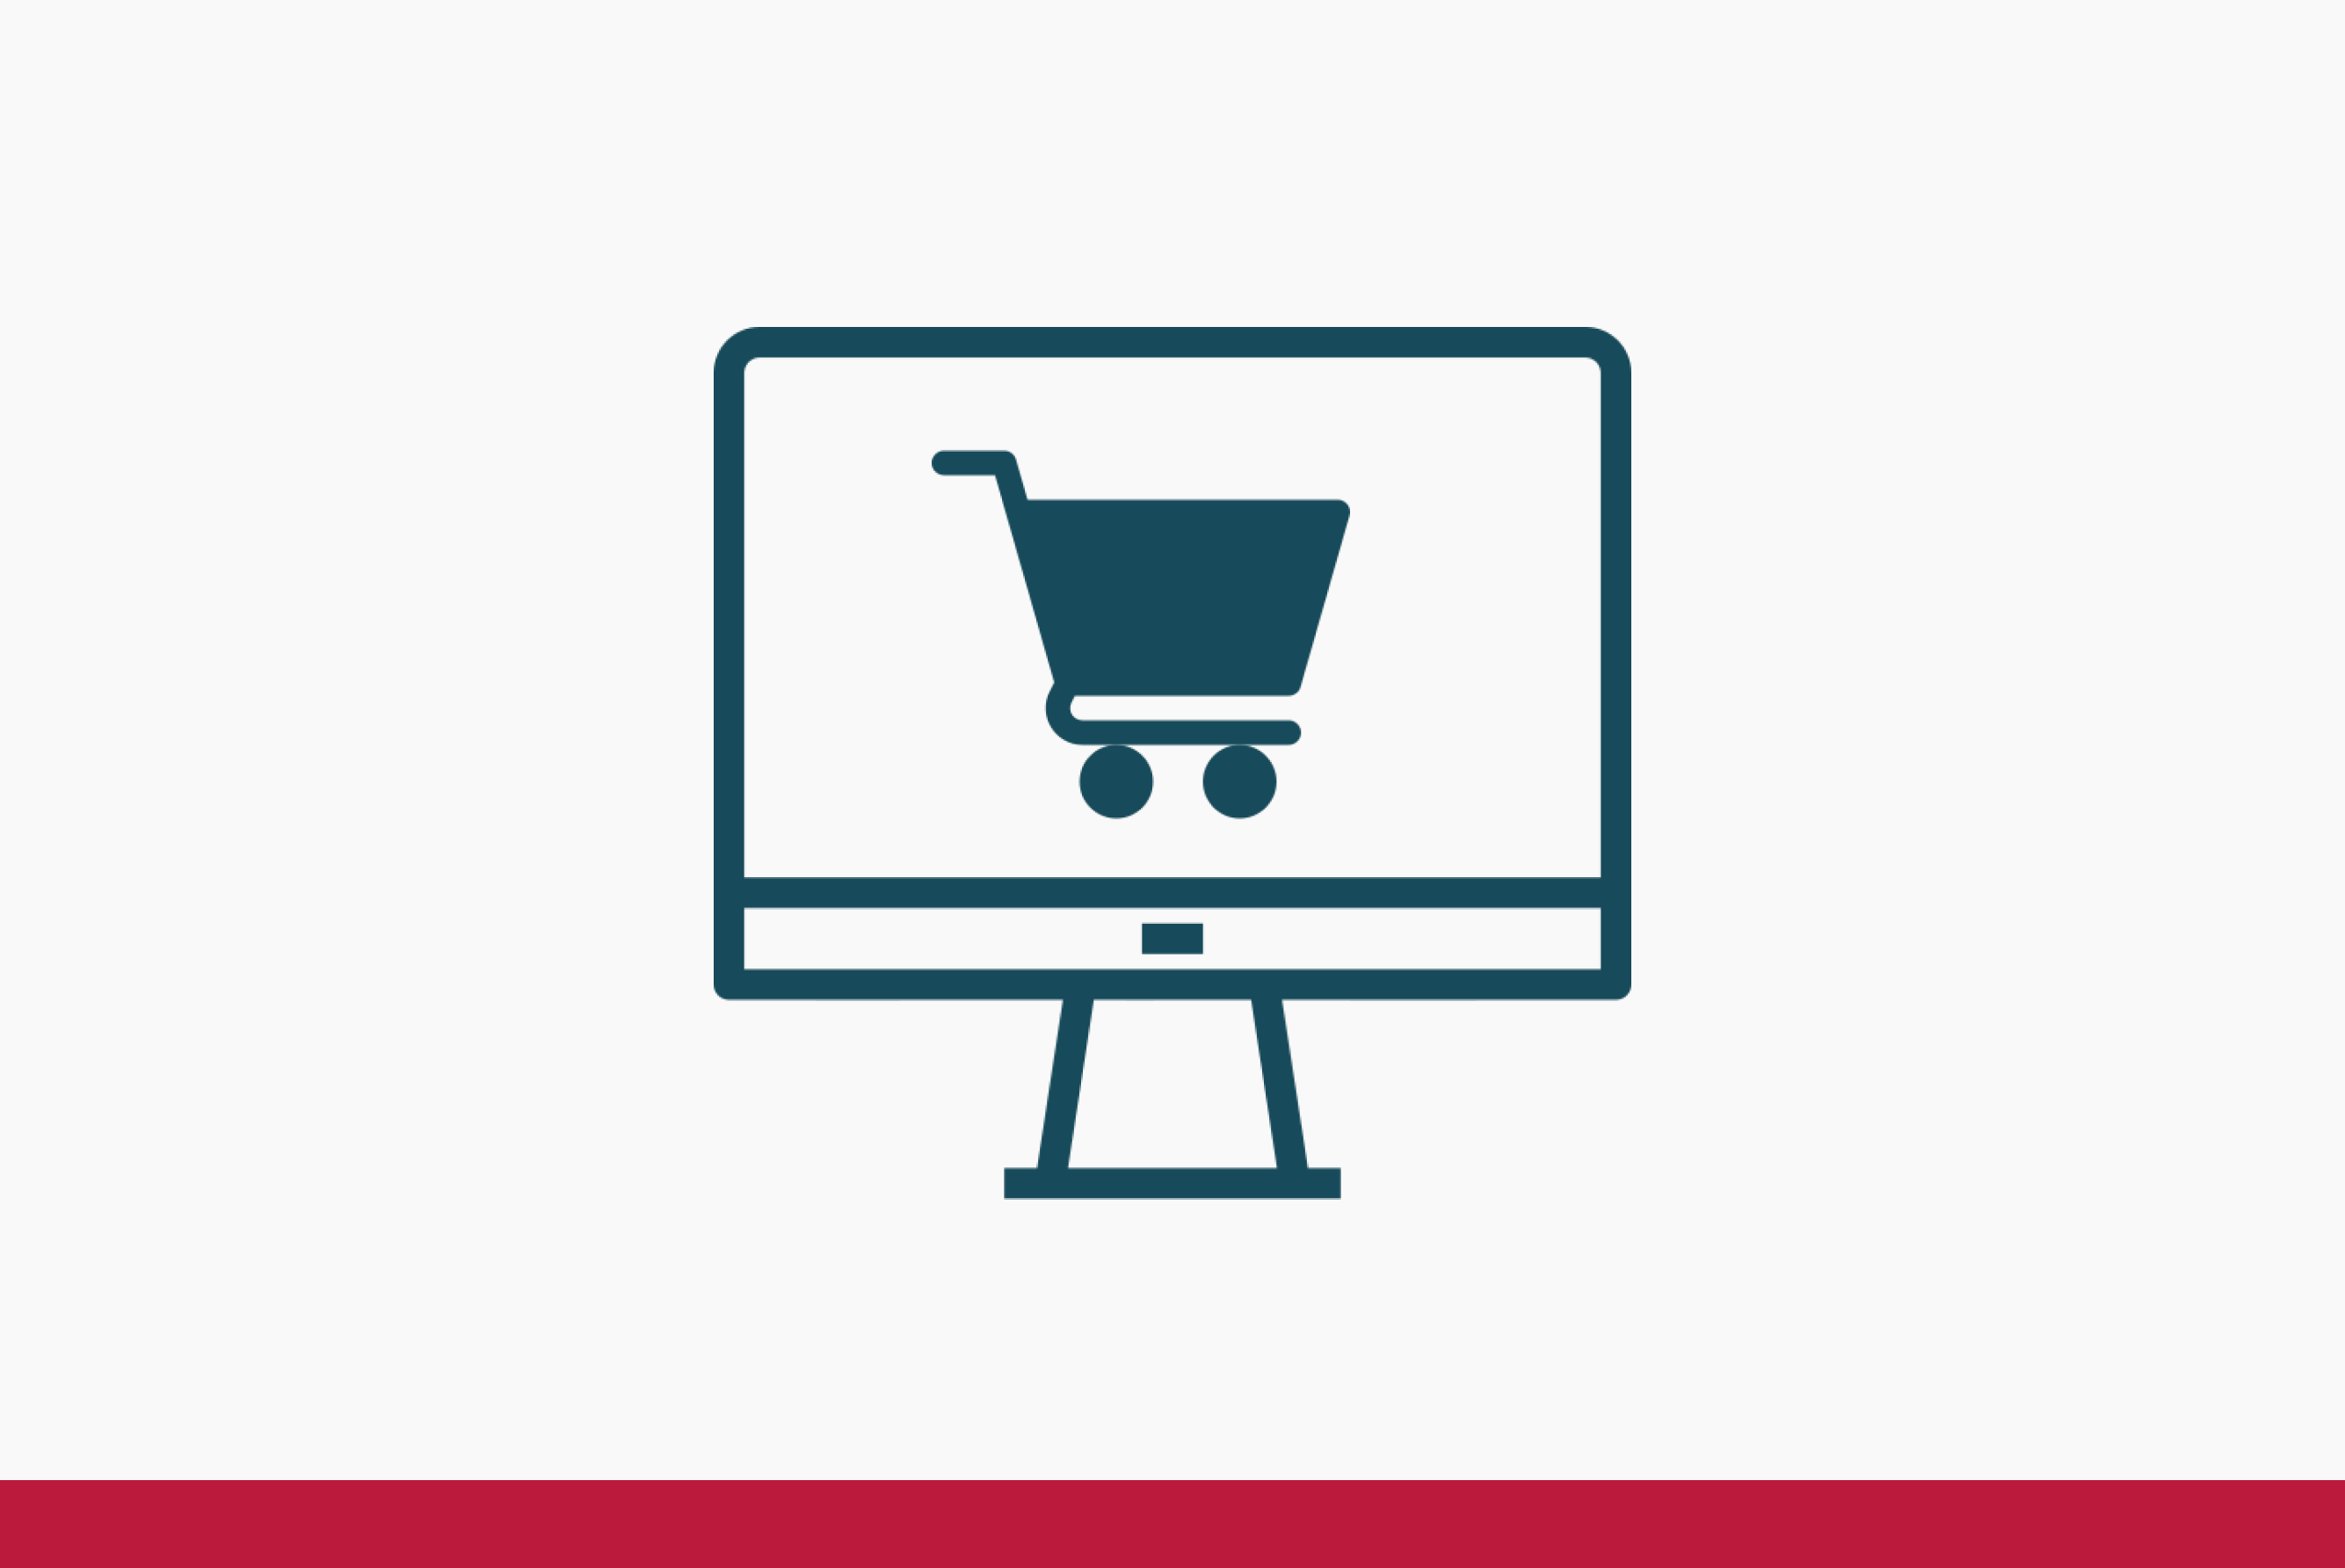 An icon of a shopping cart in a desktop